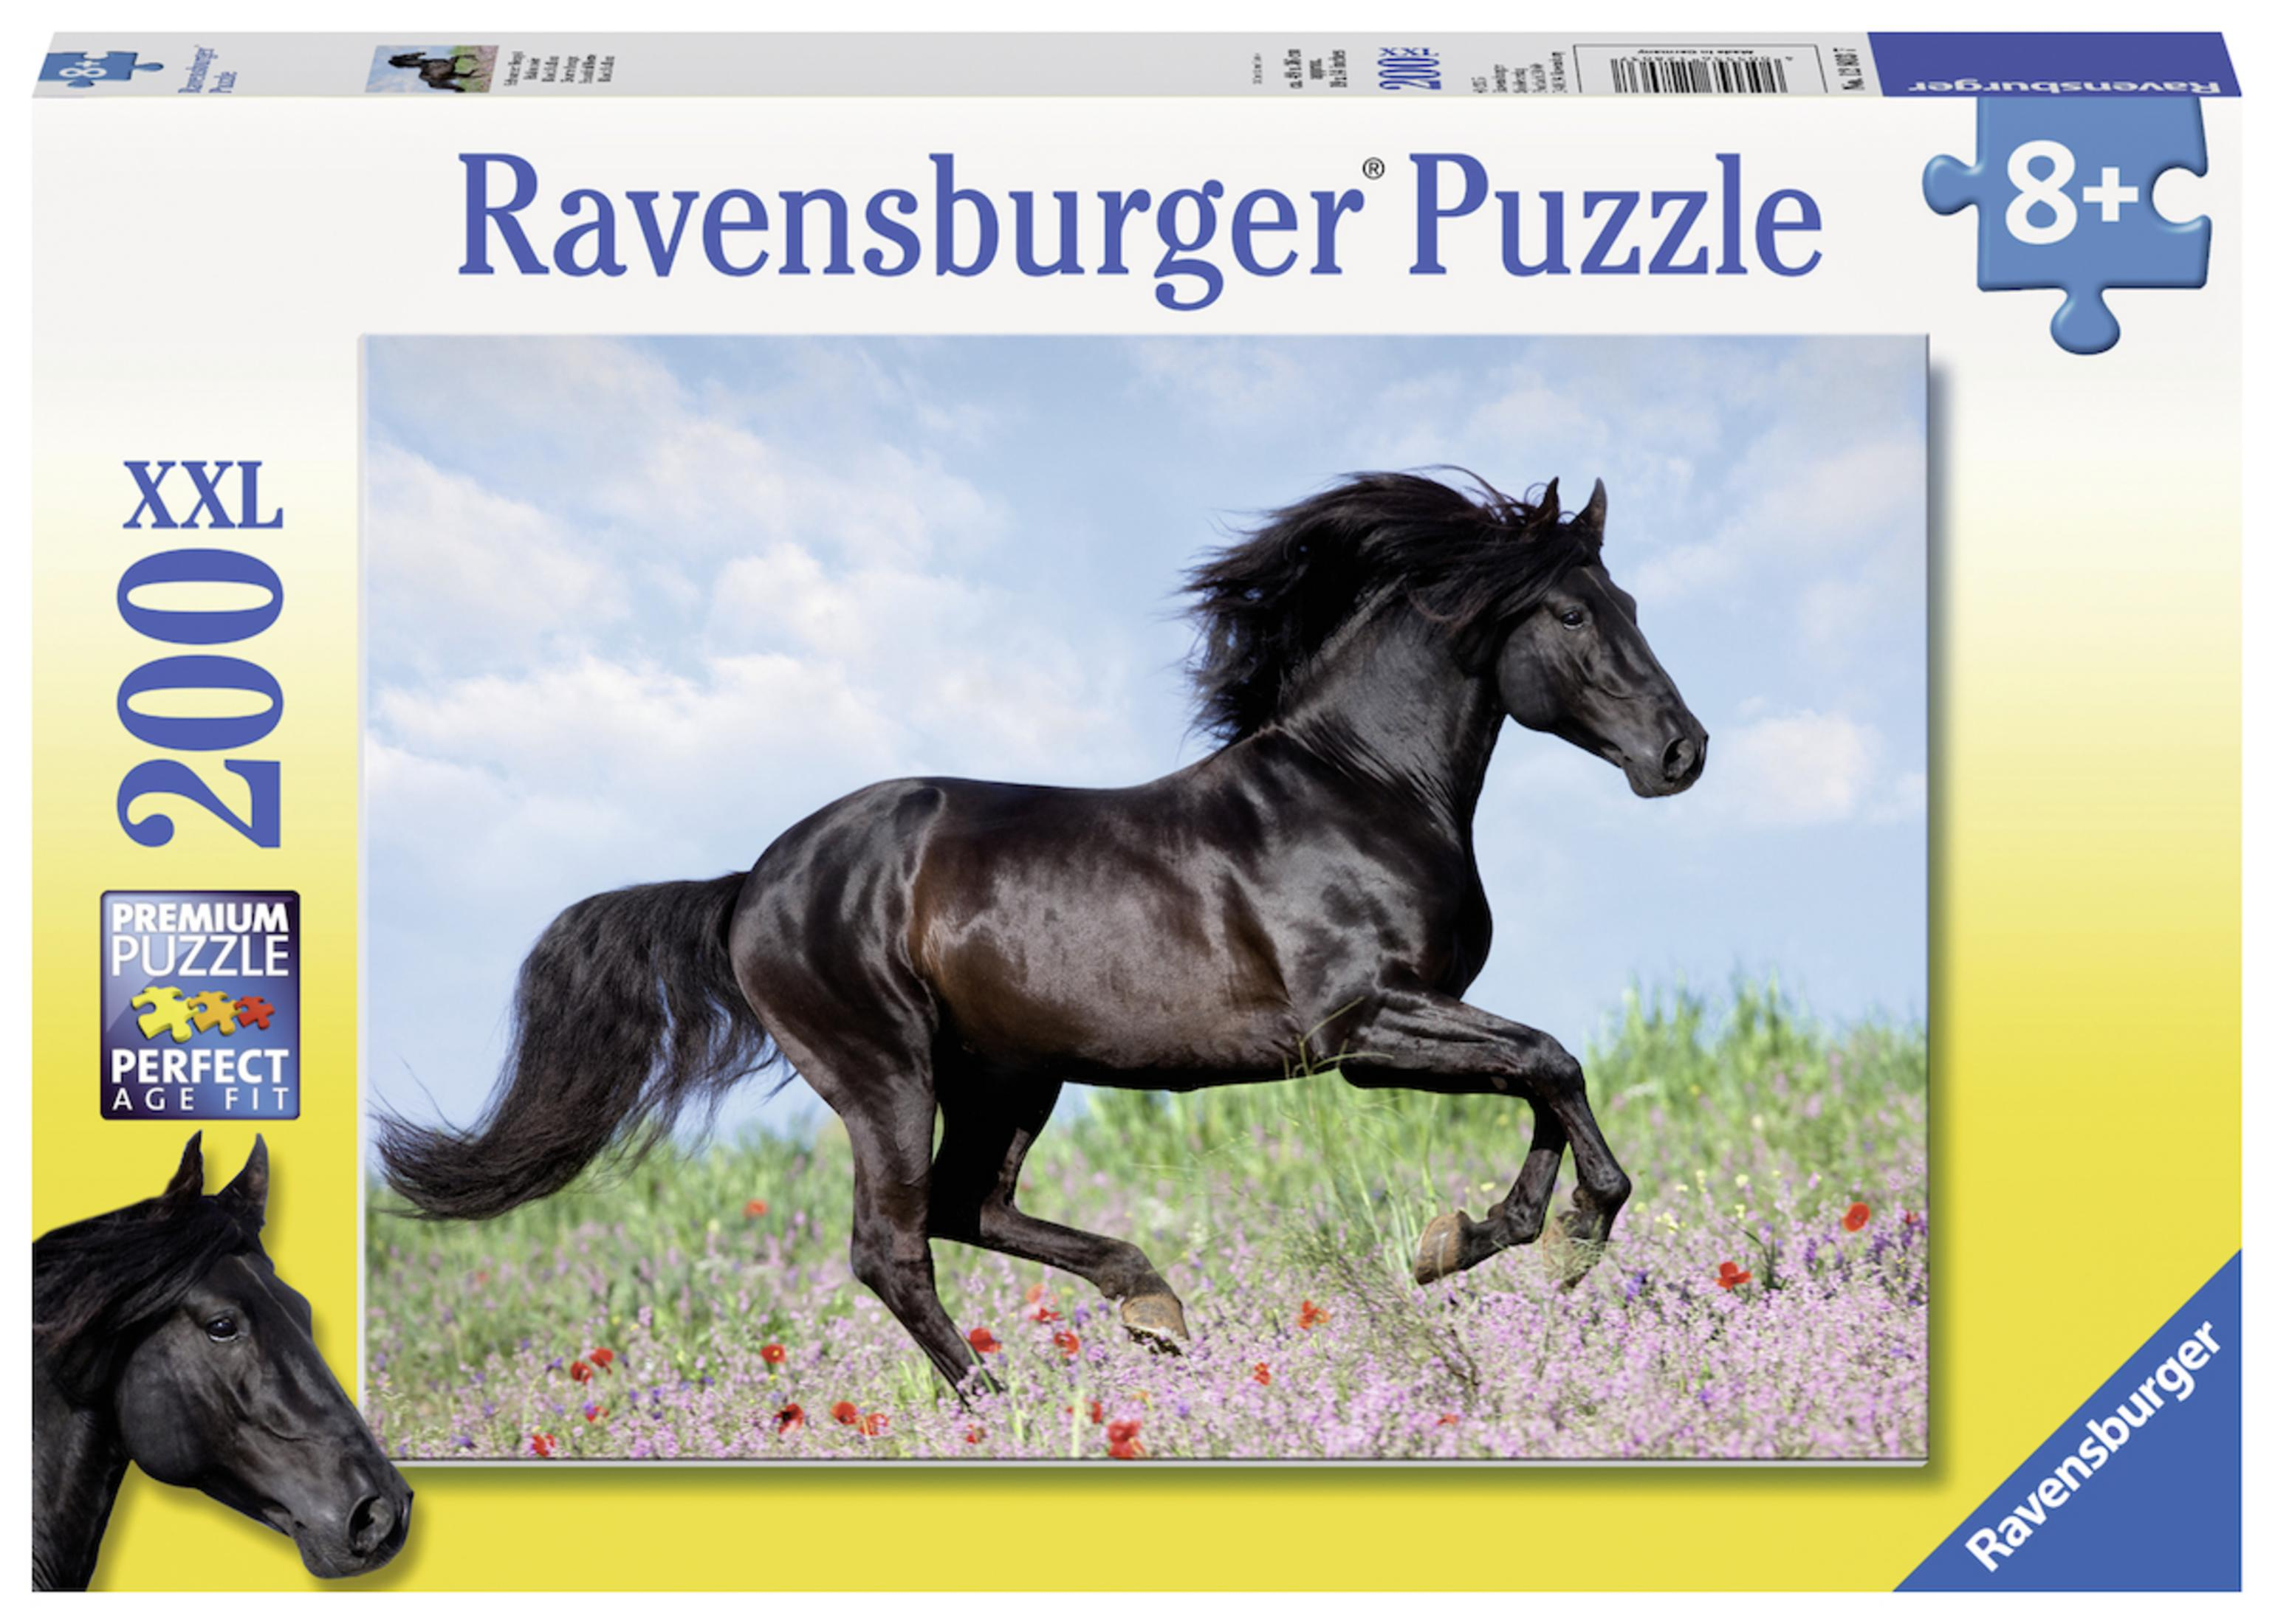 Pz. RAVENSBURGER 200T Schwarzer Puzzle Hengst